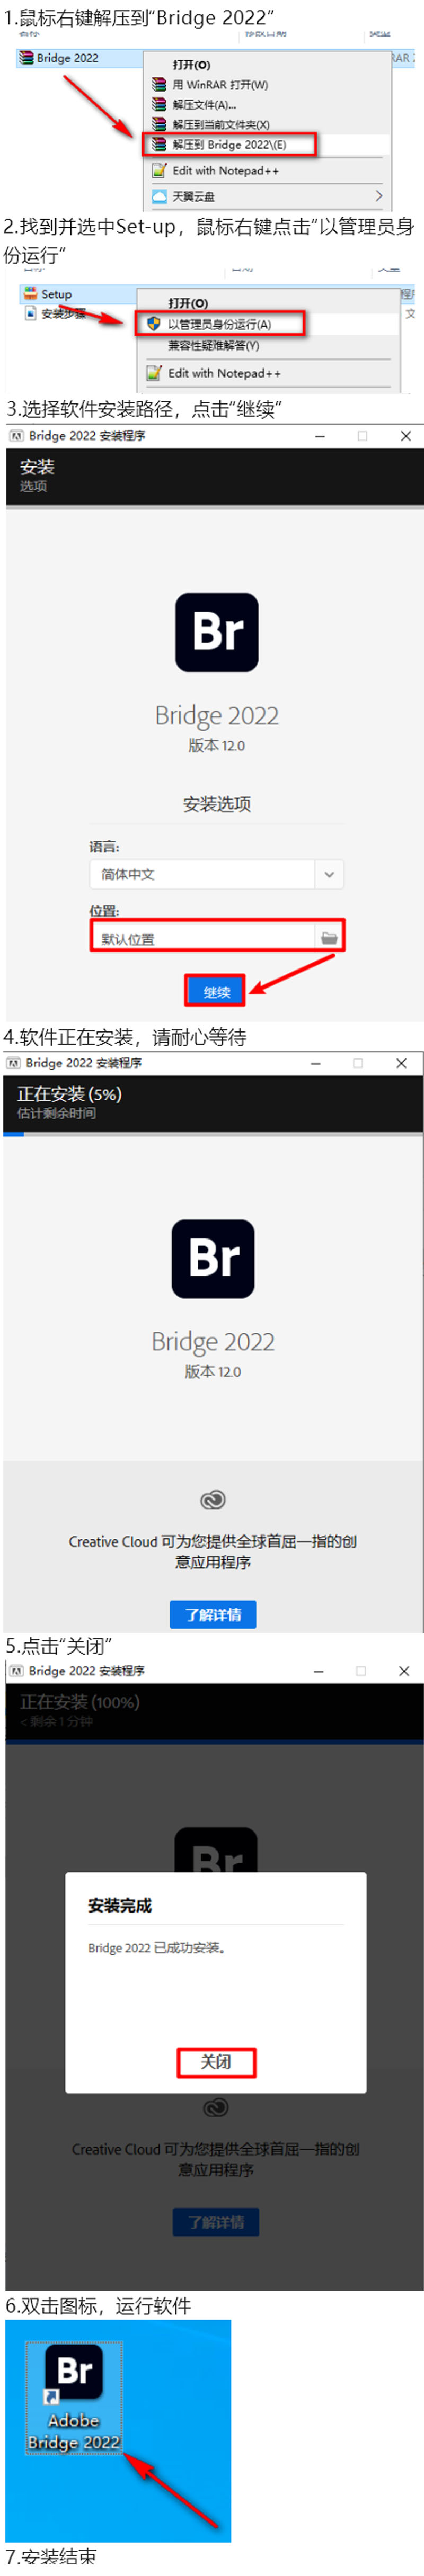 Adobe Bridge 2022װ̳.jpg